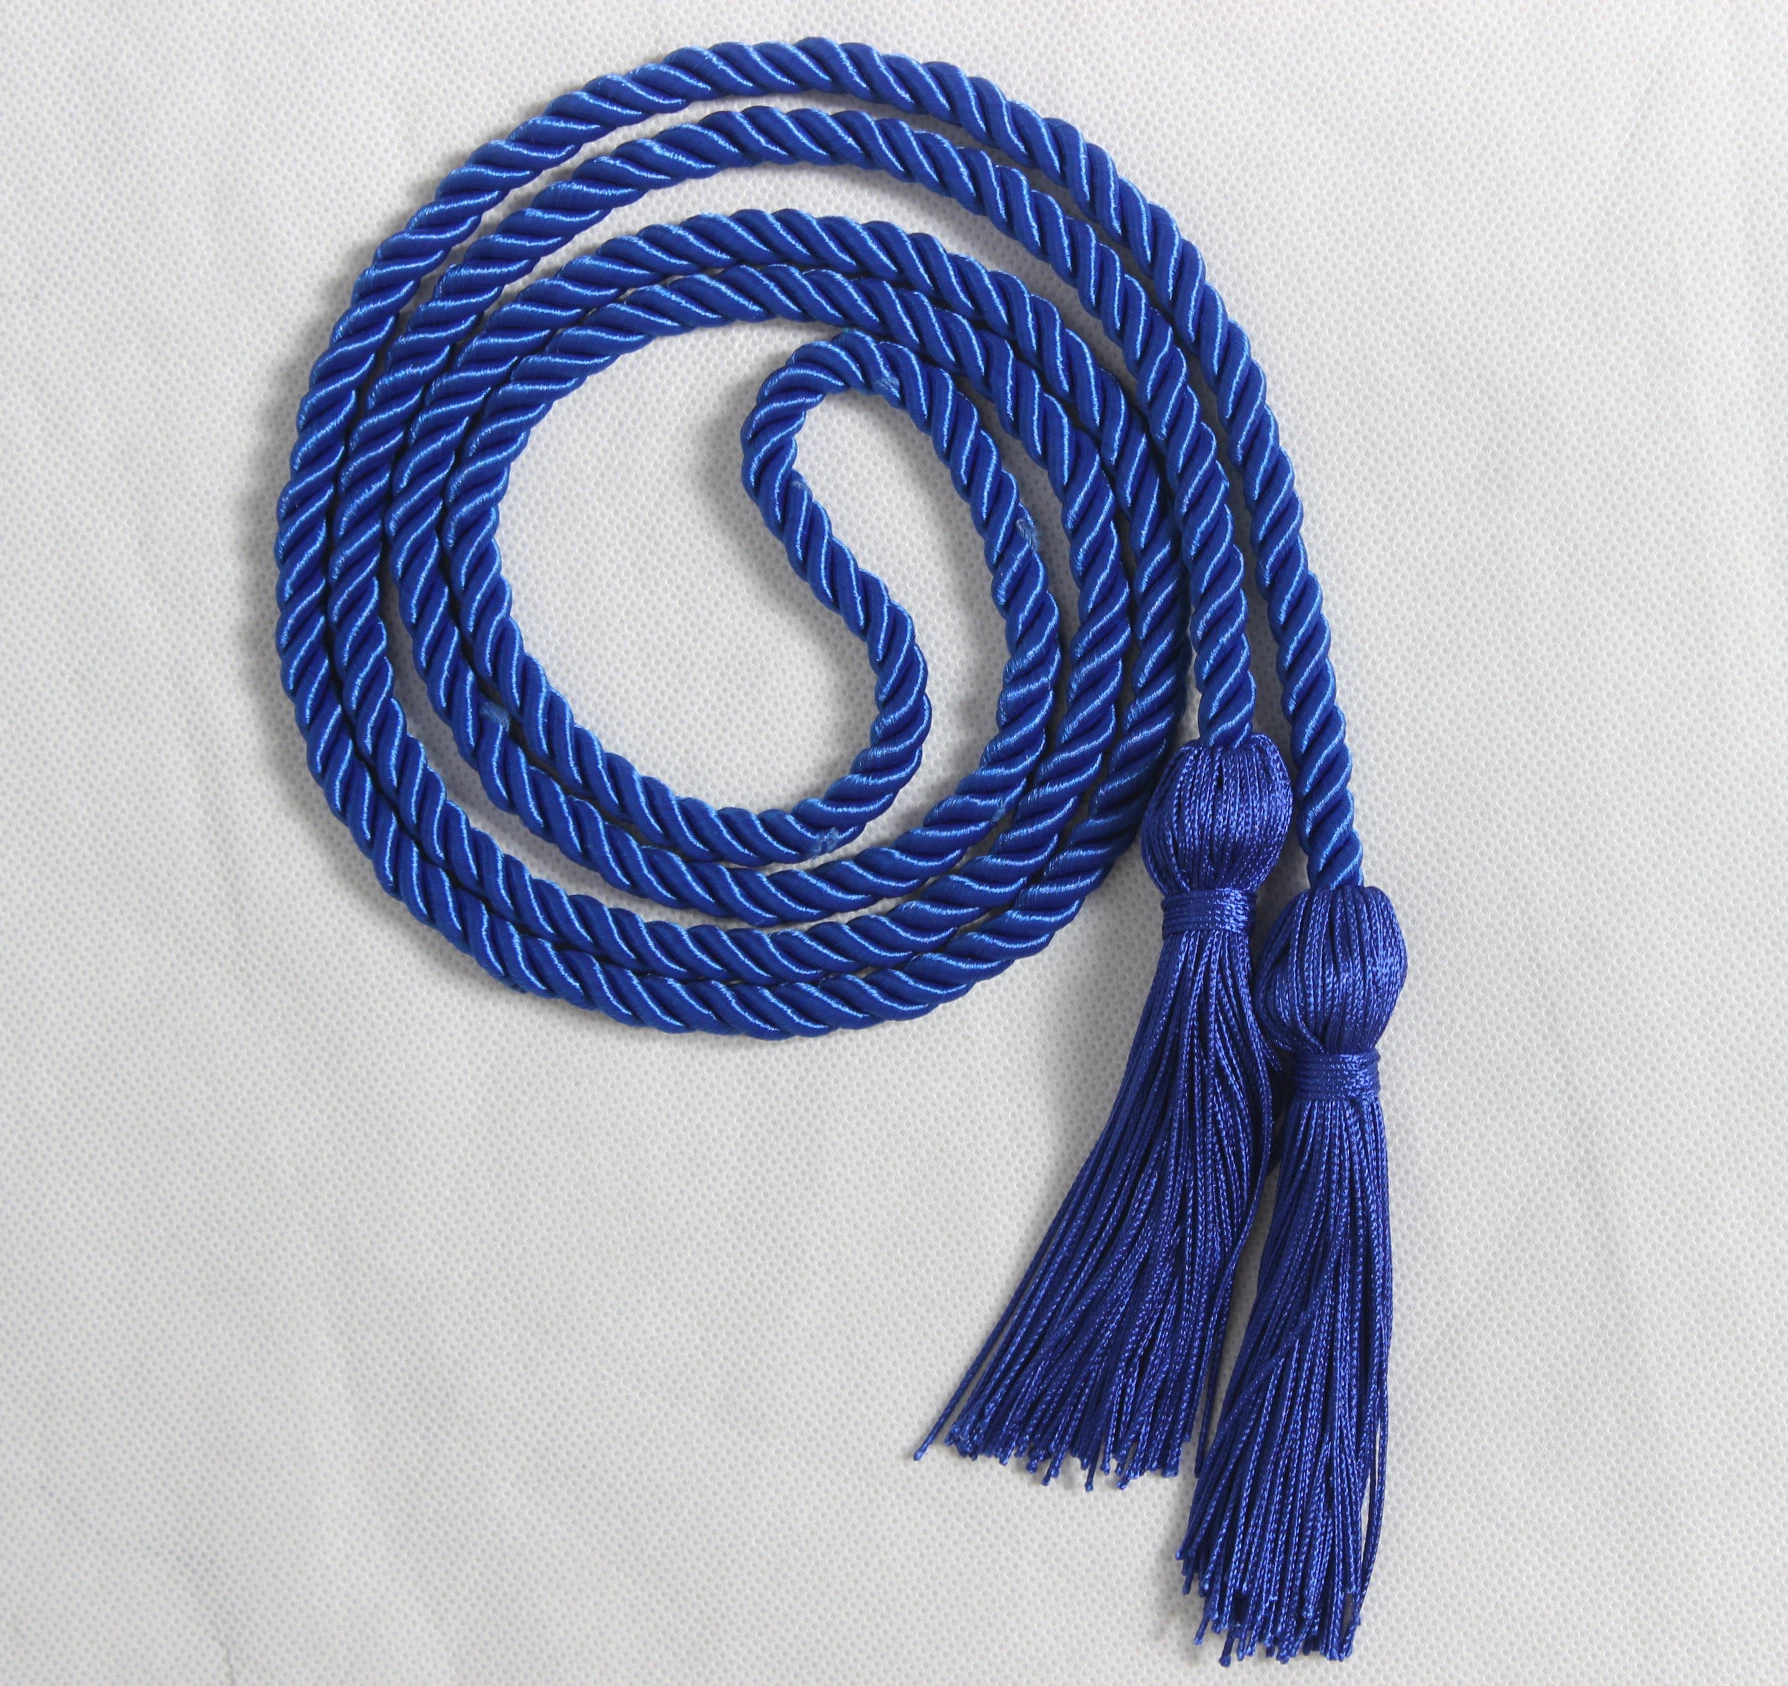 graduate honor cords